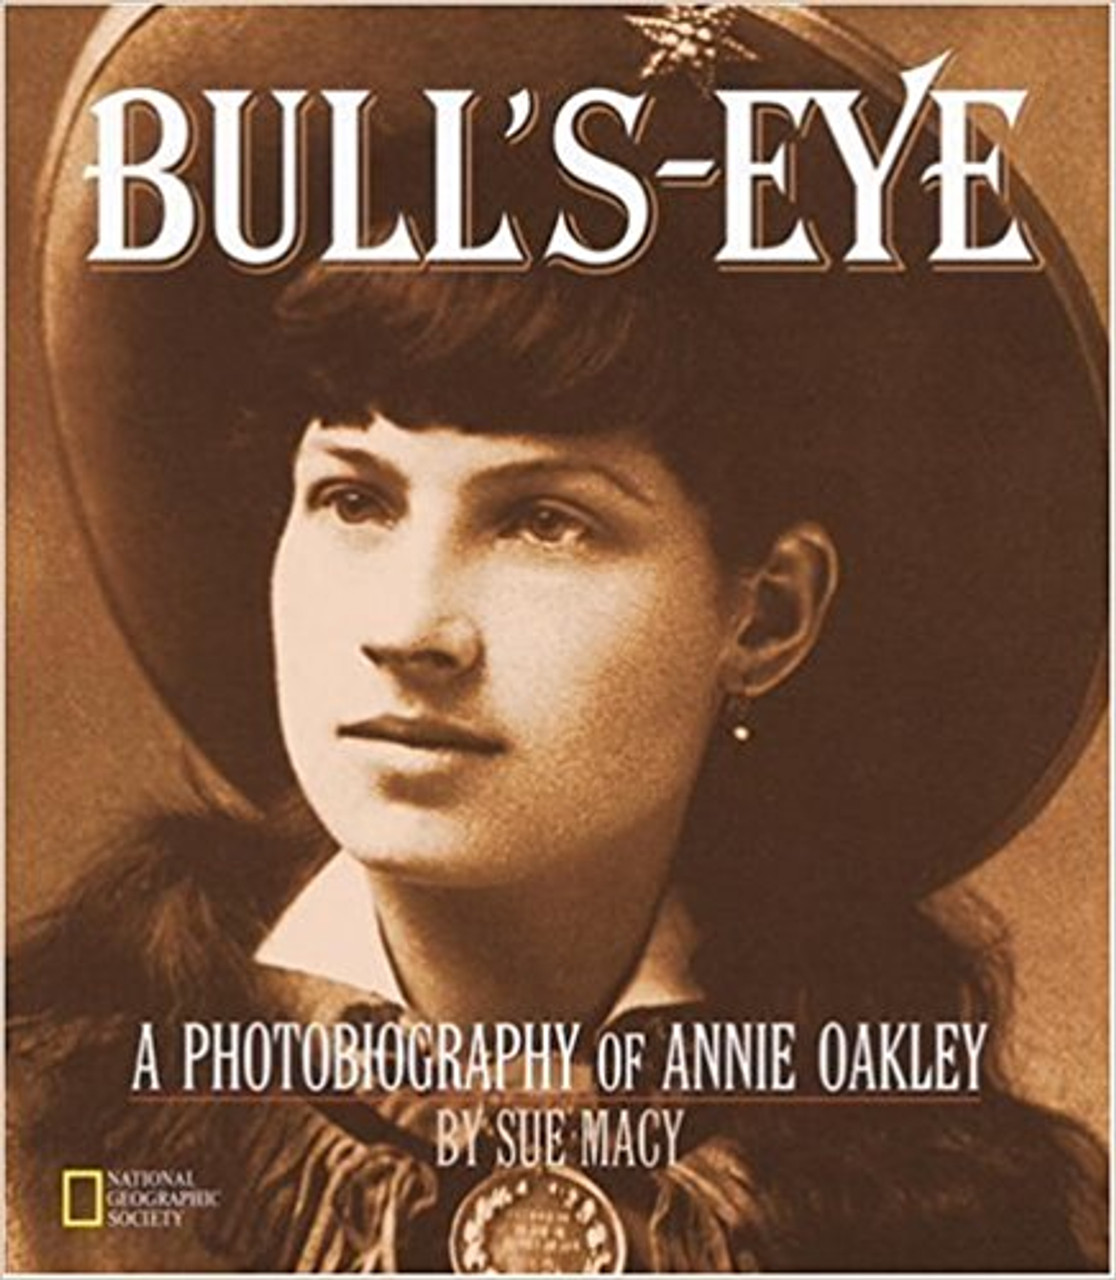 Bull's Eye: A Photobiography of Annie Oakley by Sue Macy